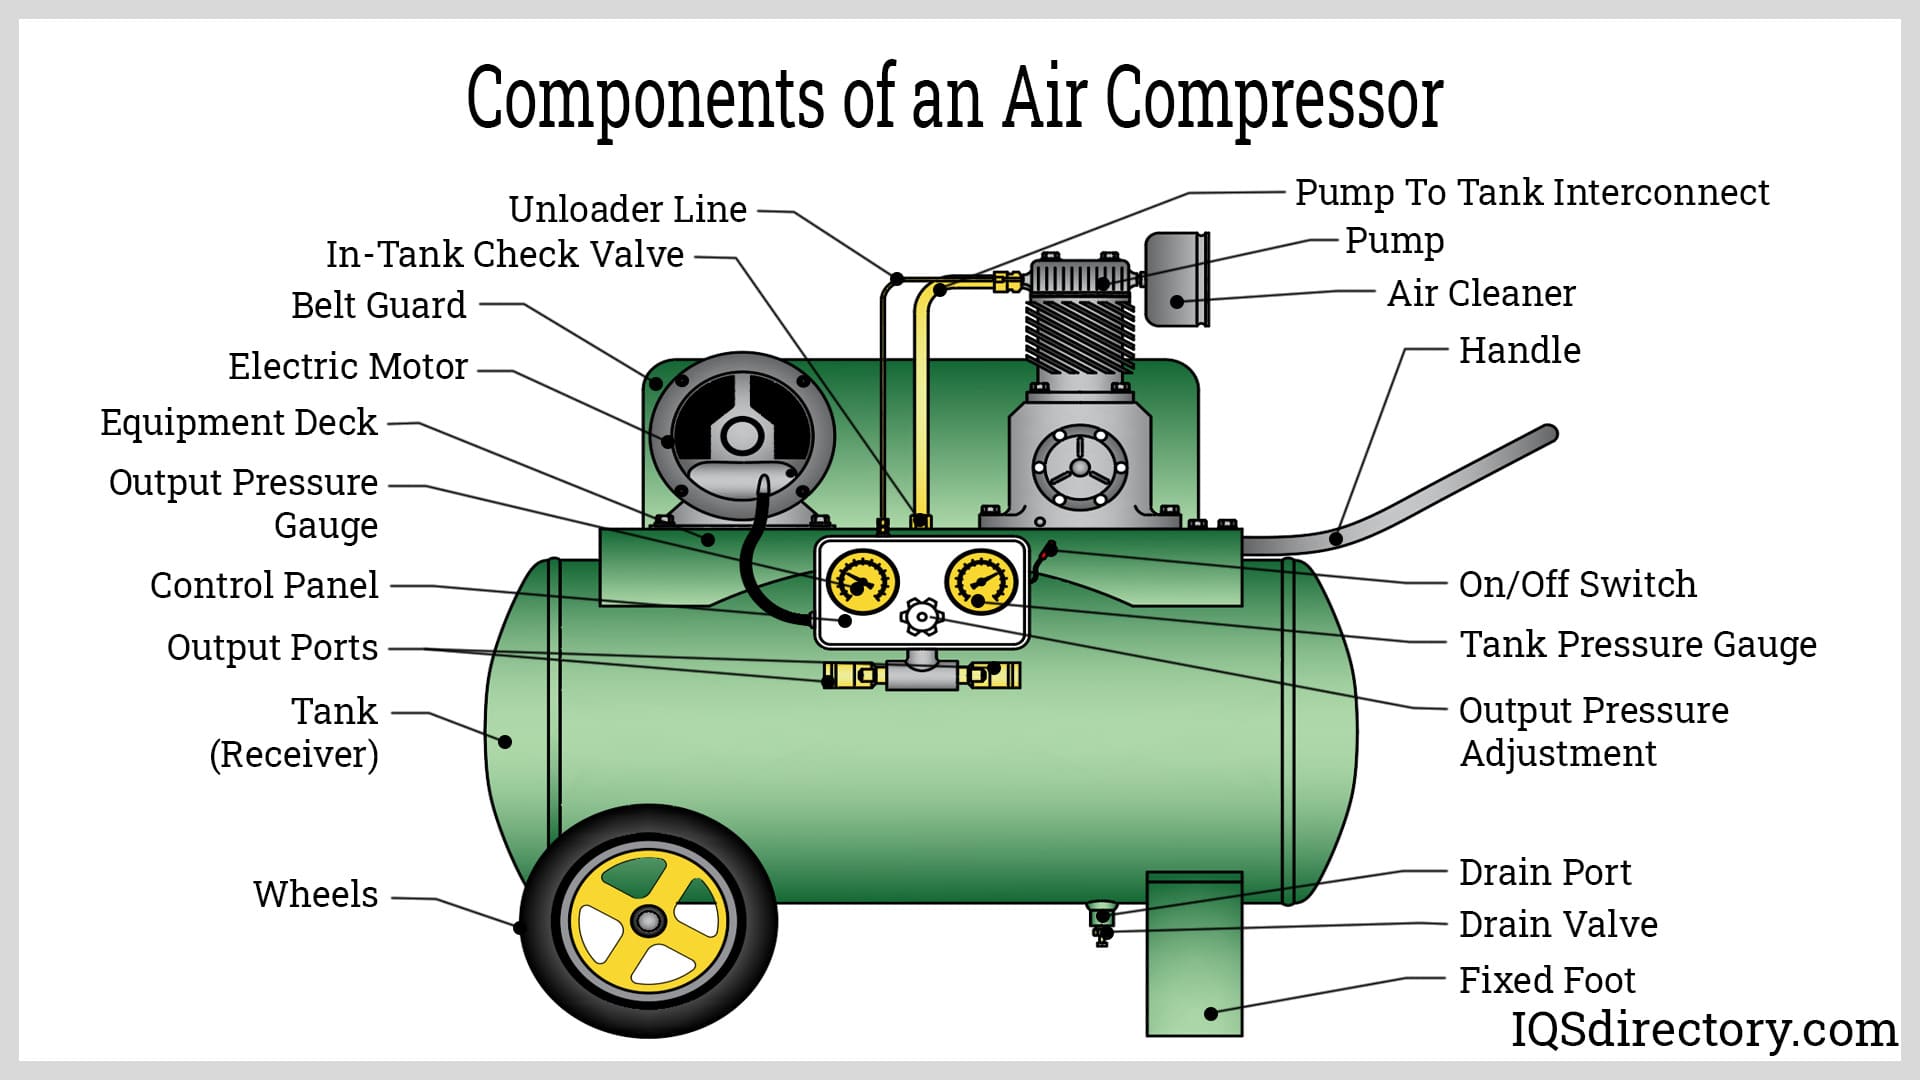 Components of an Air Compressor